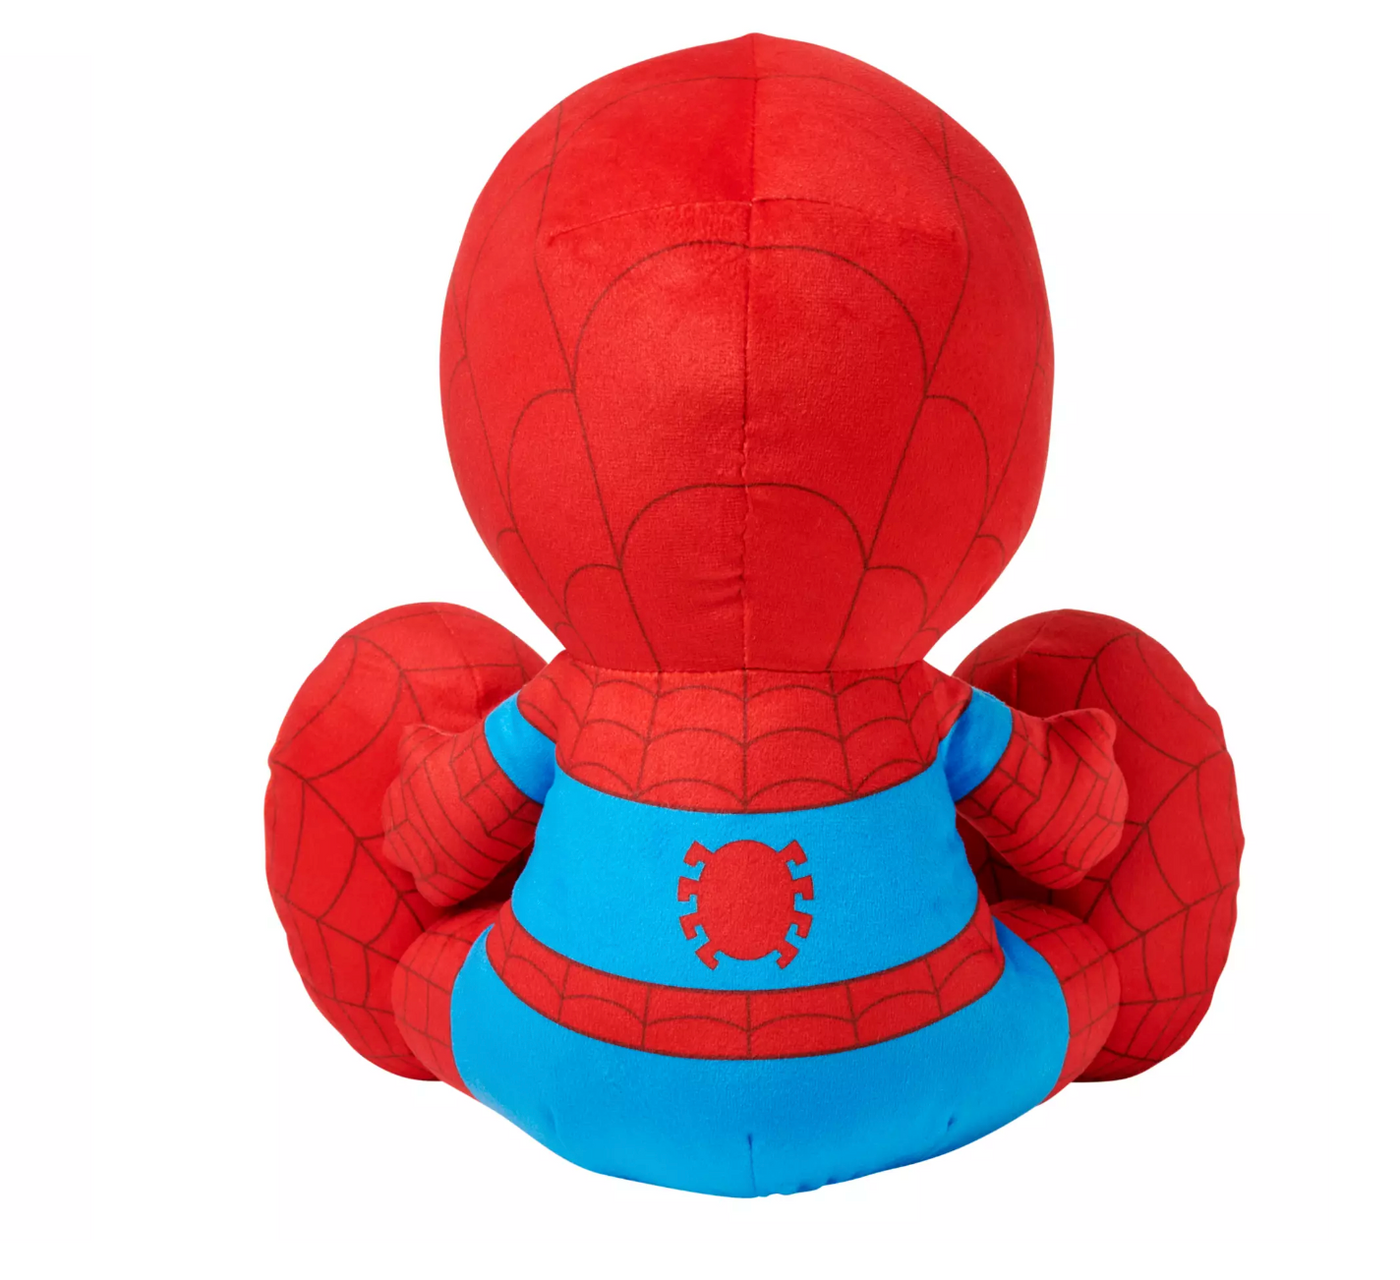 Disney Parks Marvel Spider-Man Big Feet 11inc Plush New with Tag